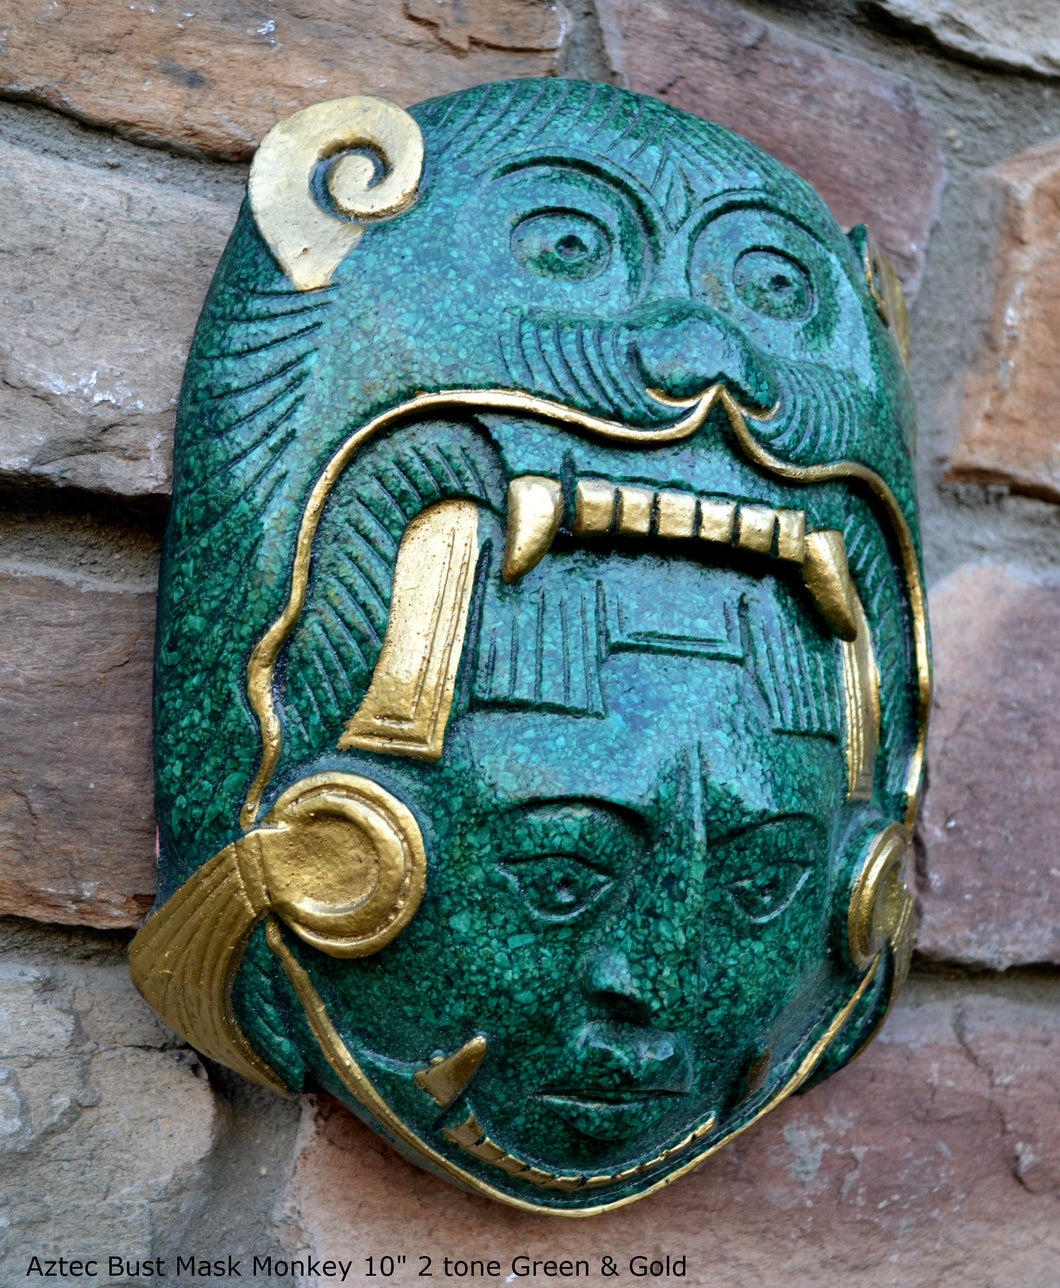 Aztec Mayan Mask Monkey statue sculpture Artifact Carved Sculpture Statue 10" www.Neo-Mfg.com